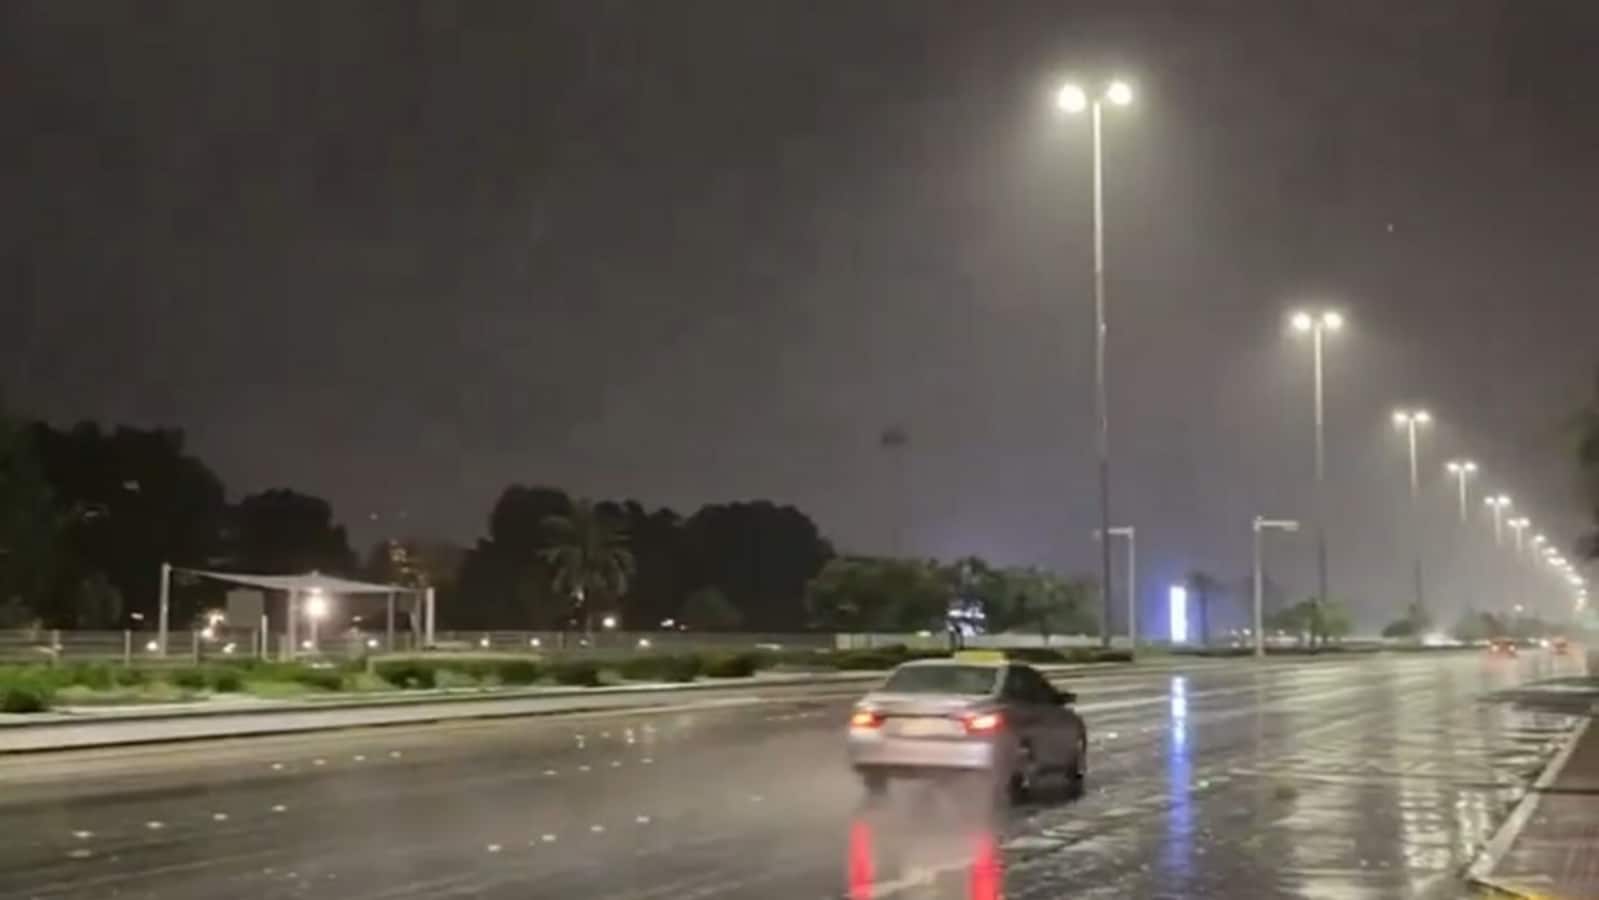 Dubai rain: Heavy showers disrupt flights; schools closed. Check UAE weather alerts